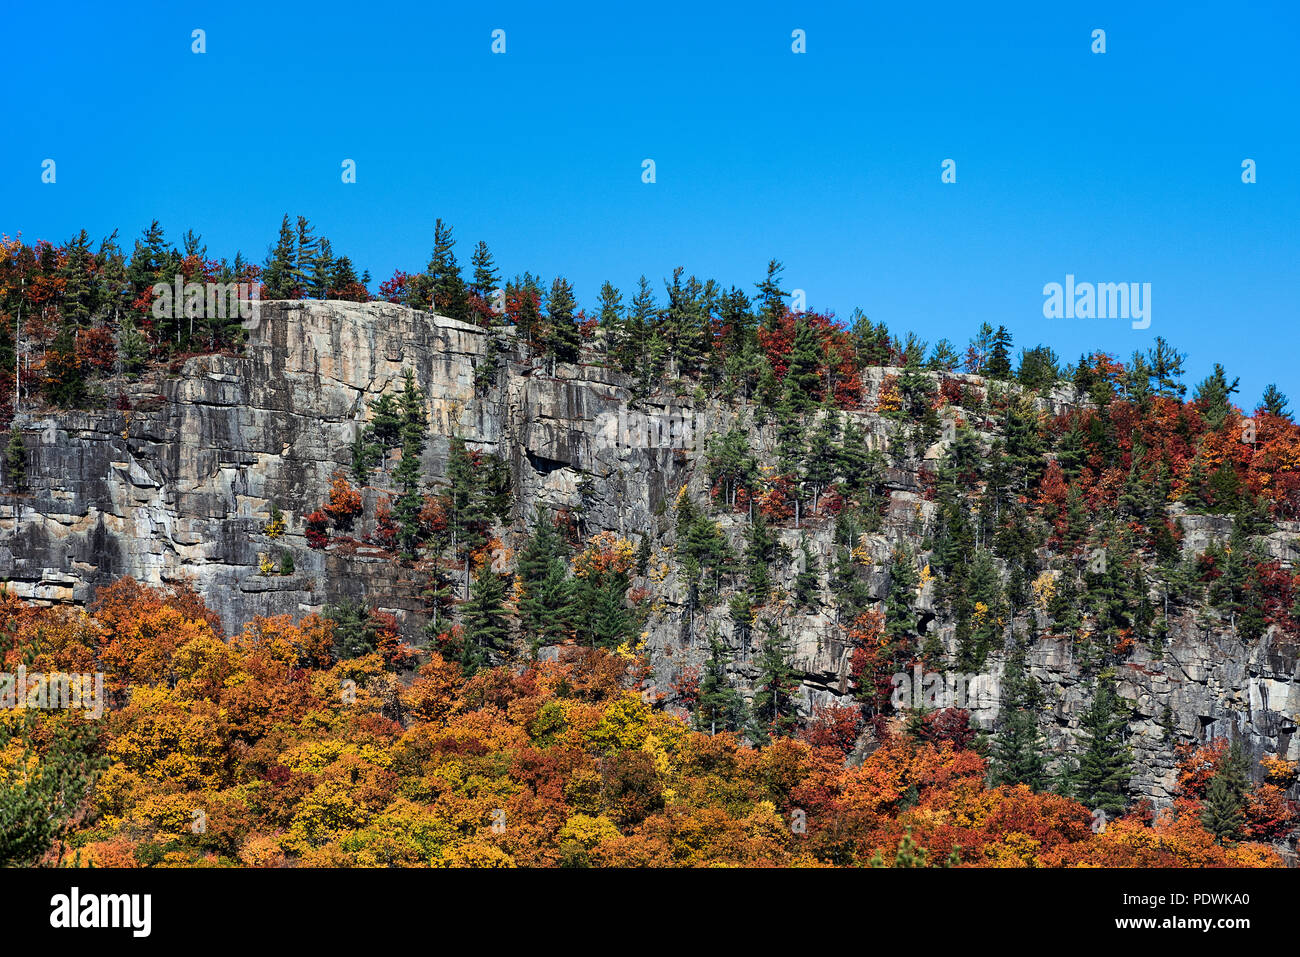 Berg Wand aus Granit und Herbst Laub, Franconia Notch State Park, New Hampshire, USA. Stockfoto